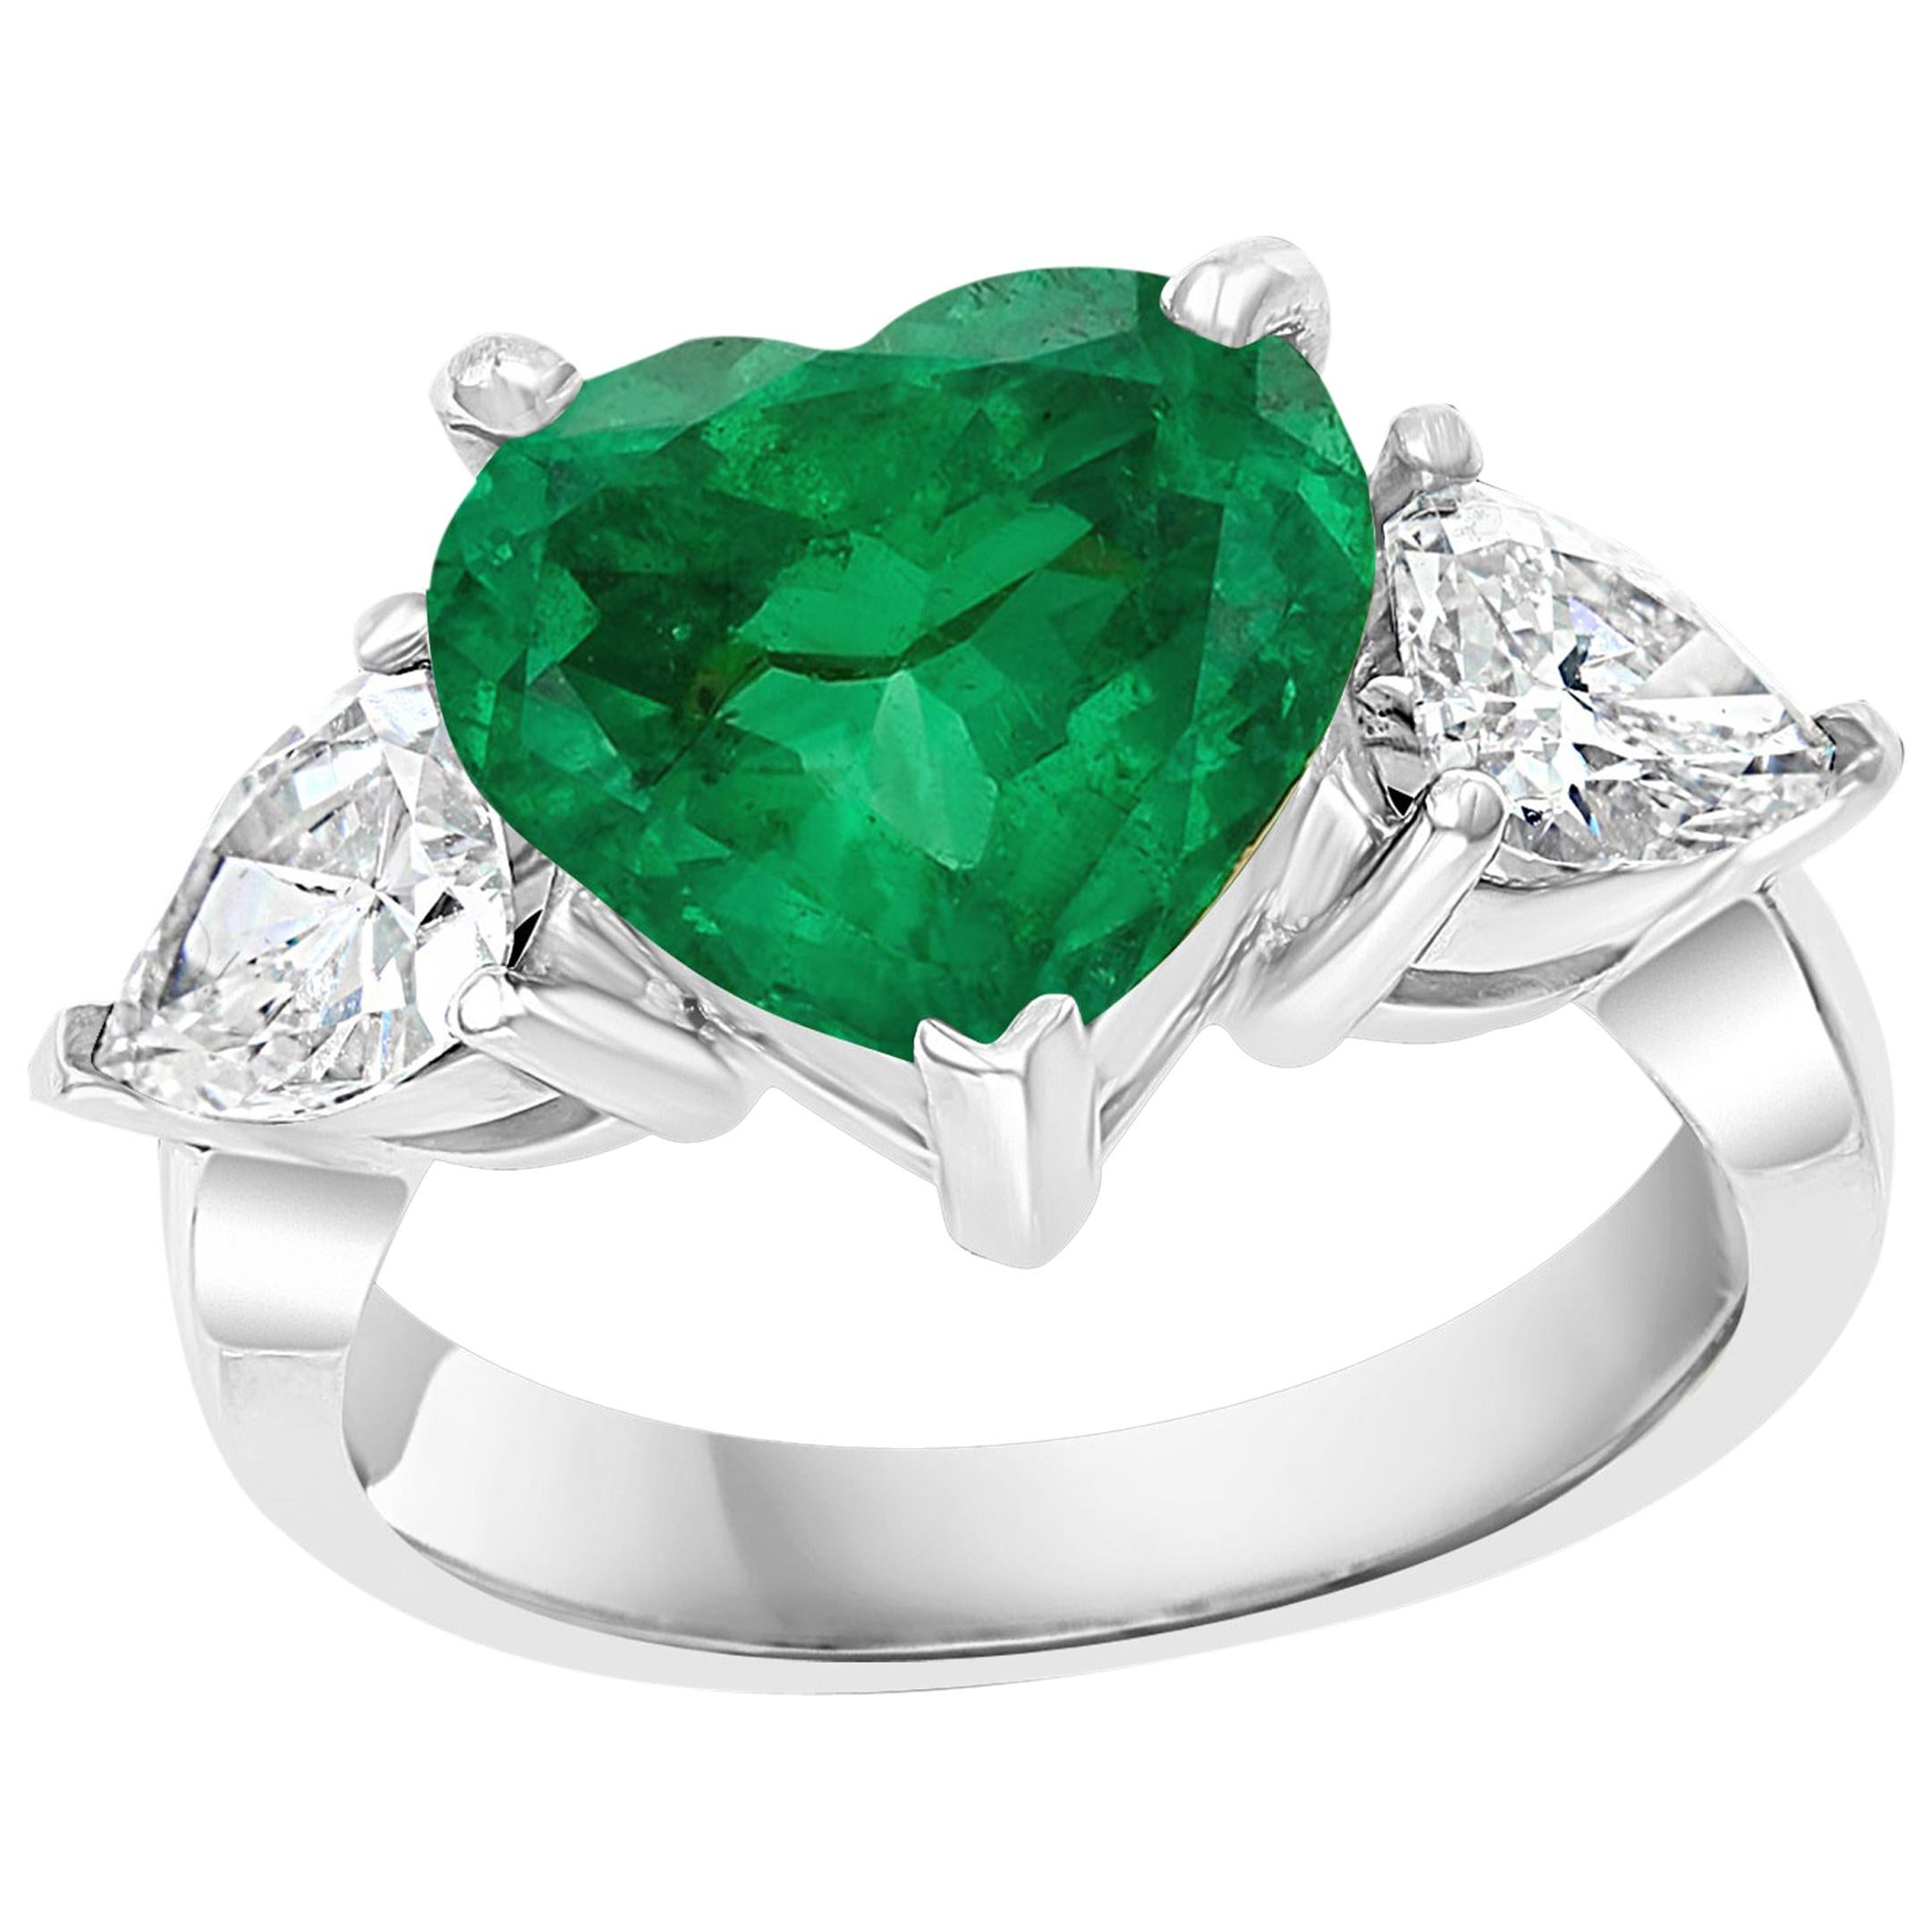 All Stone Emerald Ring 4 Carat 4.4 Ratti Panna Stone Ring Original  Certified Zambian Panna Anguthi Natural Haritmani Stone Panna Ring पन्ना  रत्न ओरिजिनल रिंग एमराल्ड हरा पन्ना स्टोन अंगूठी : Amazon.in ...